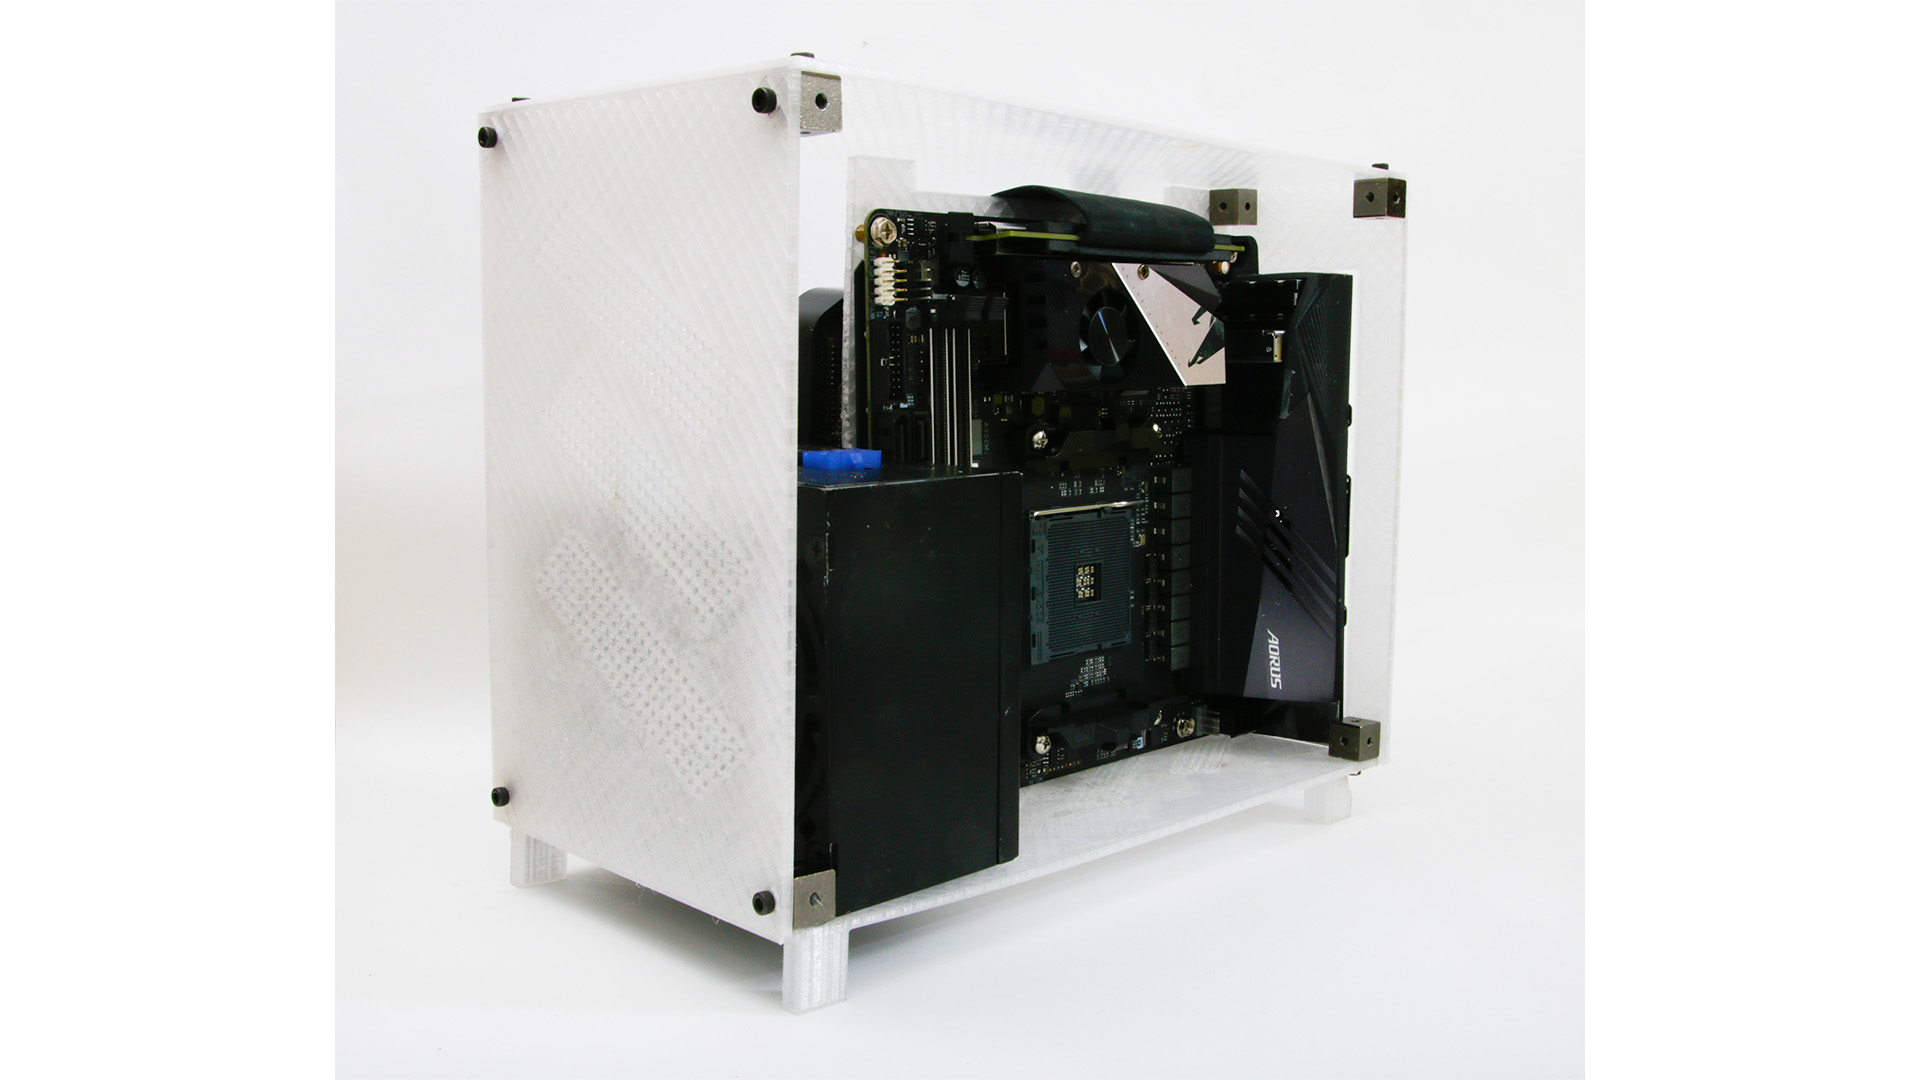 3D printed PC case